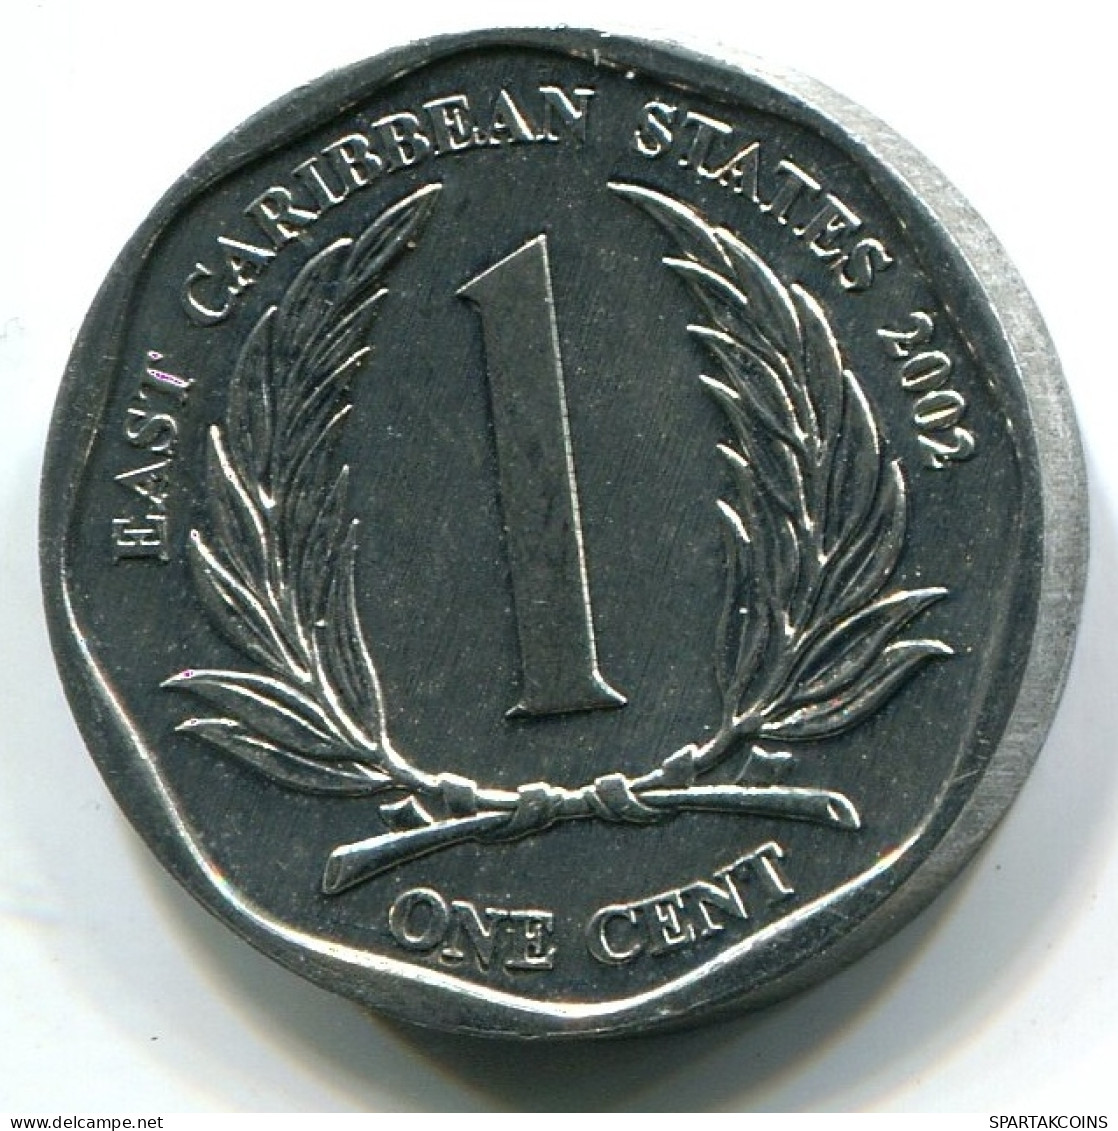 1 CENT 2002 EAST CARIBBEAN UNC Coin #W10907.U - Caraibi Orientali (Stati Dei)